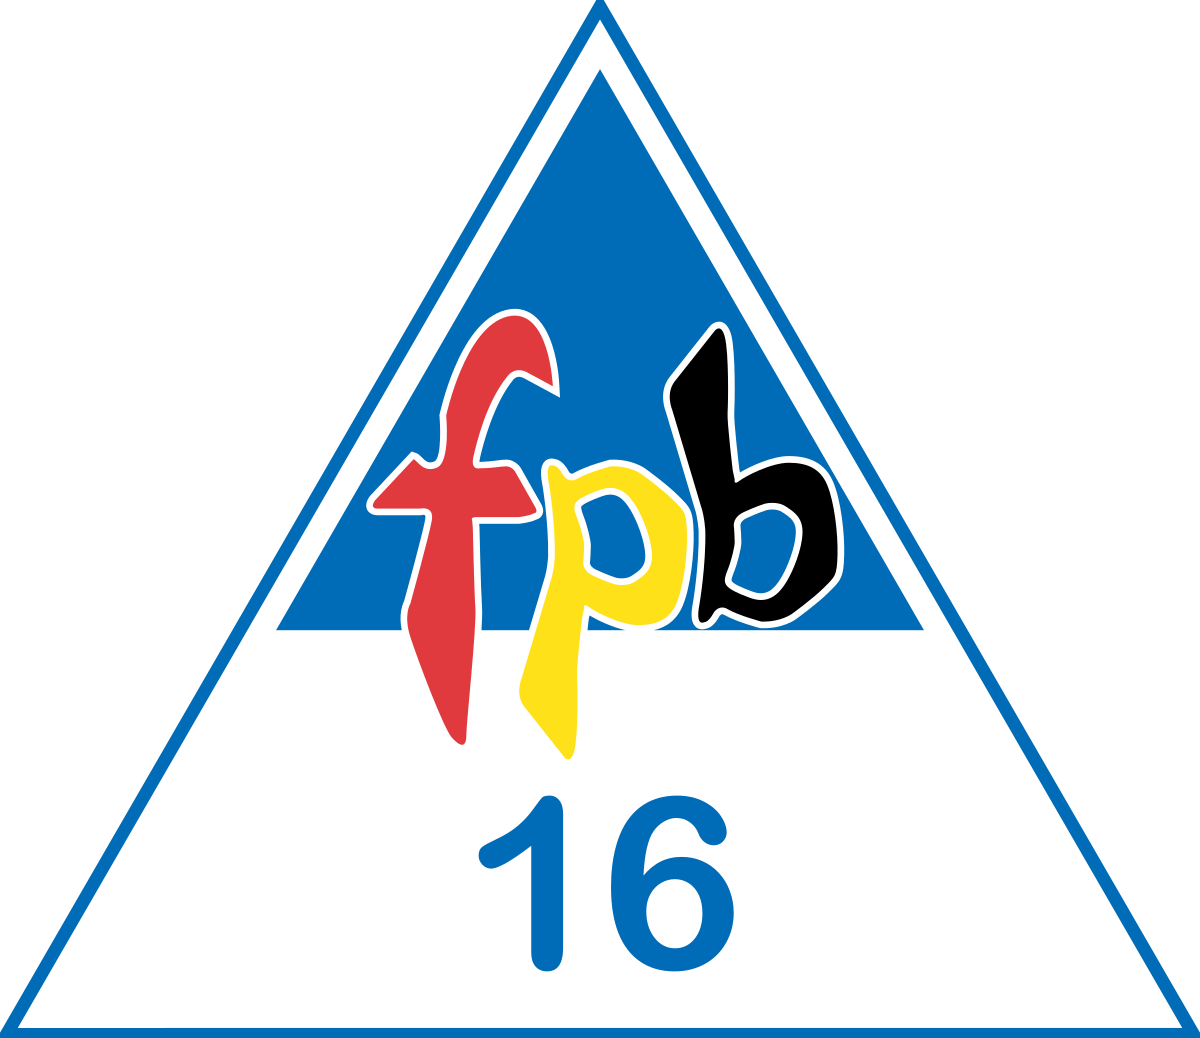 fpb16 rating